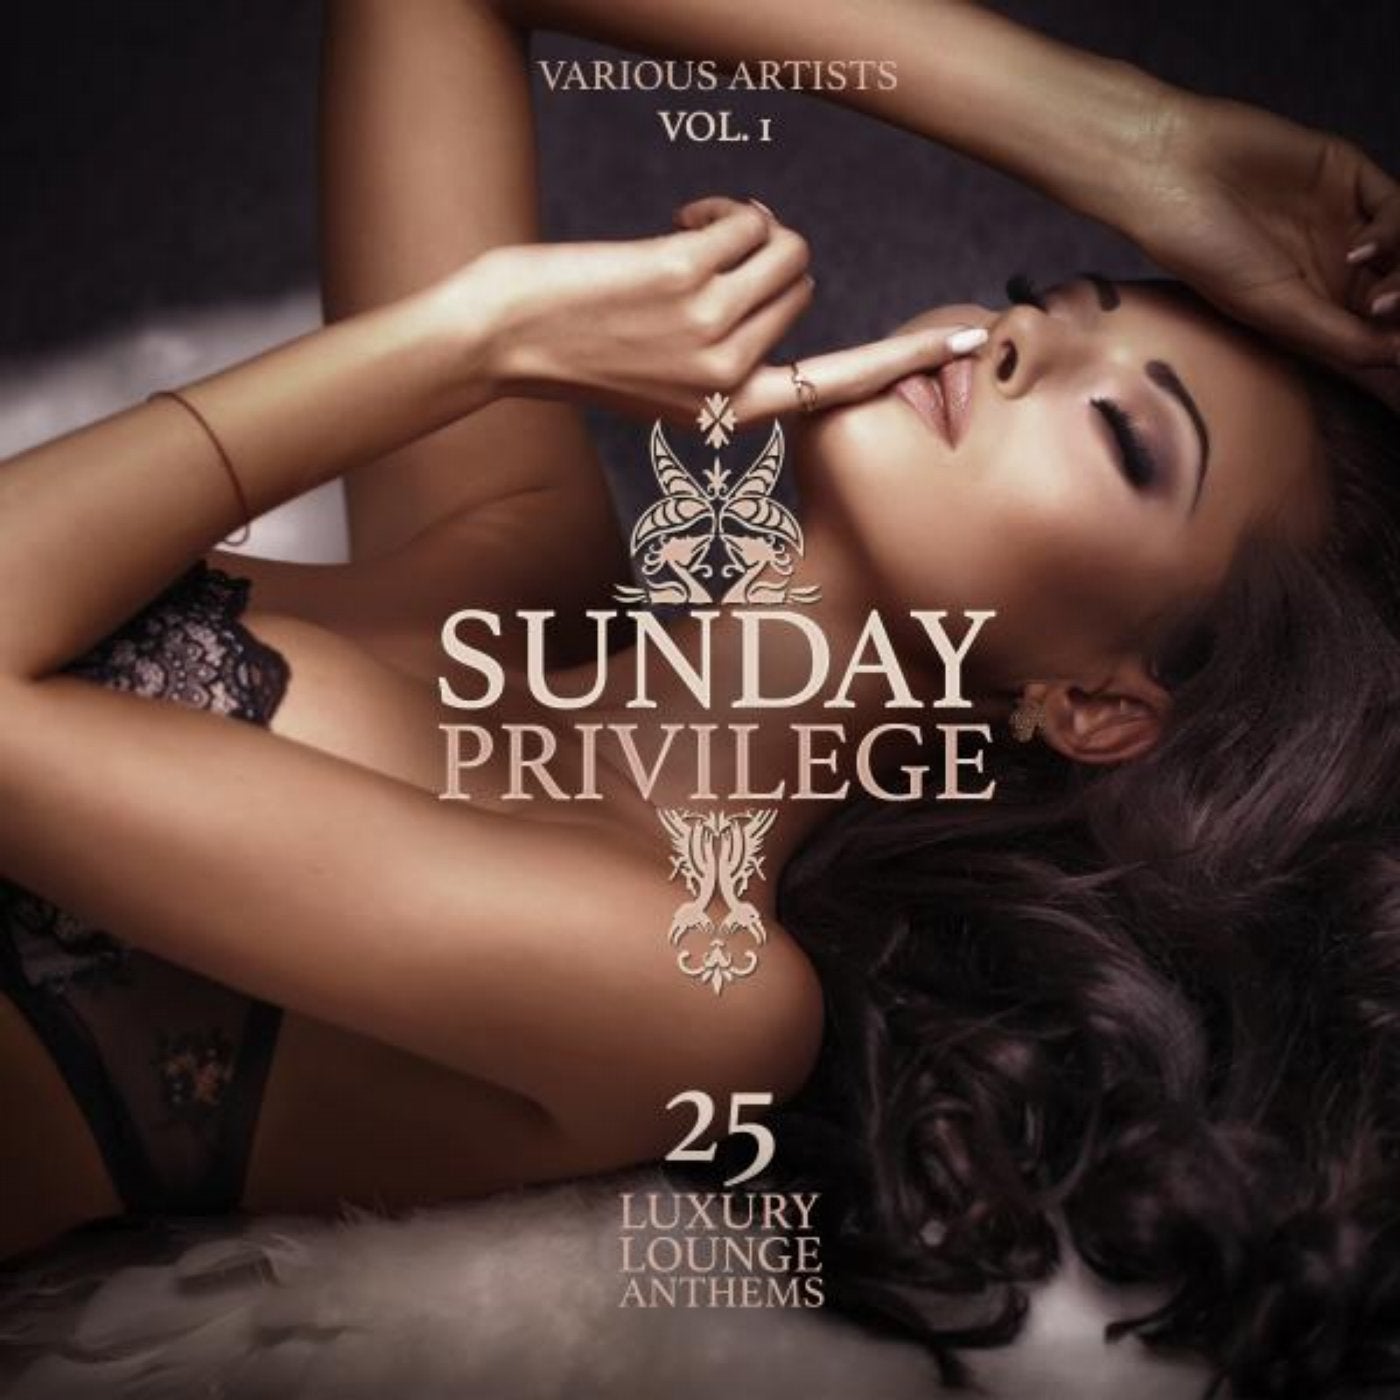 Sunday Privilege, Vol. 1 (25 Luxury Lounge Anthems)